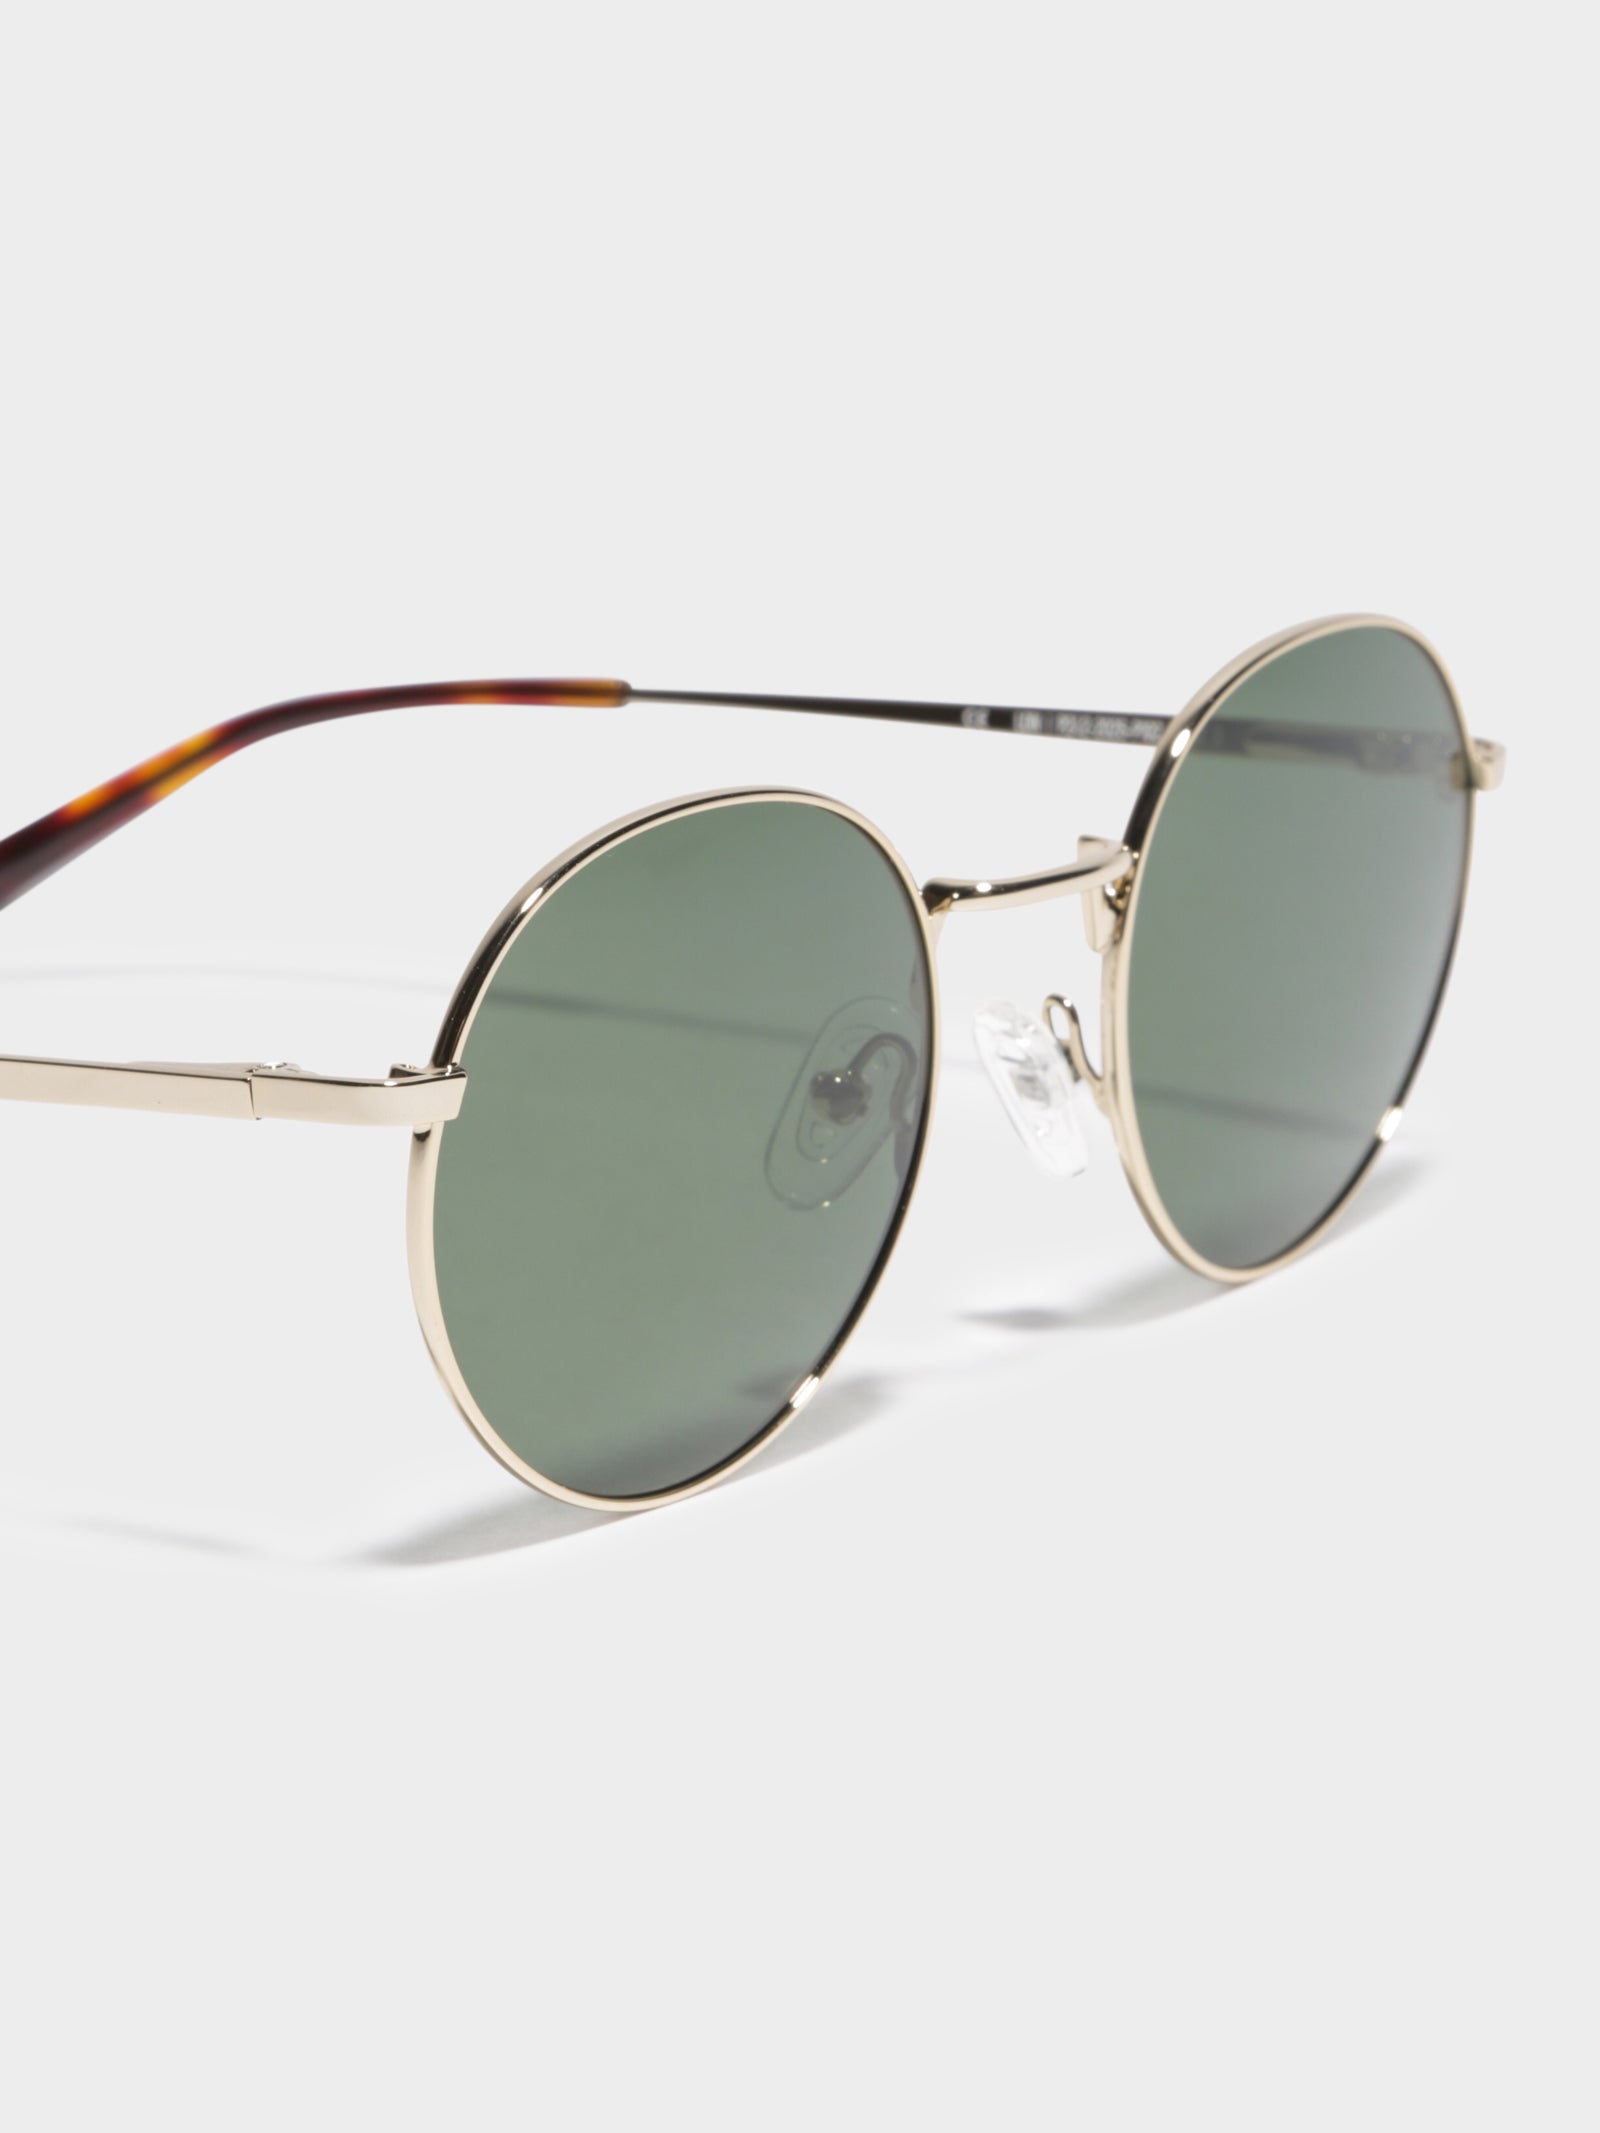 LON Polarised Sunglasses in Dark Green - Glue Store